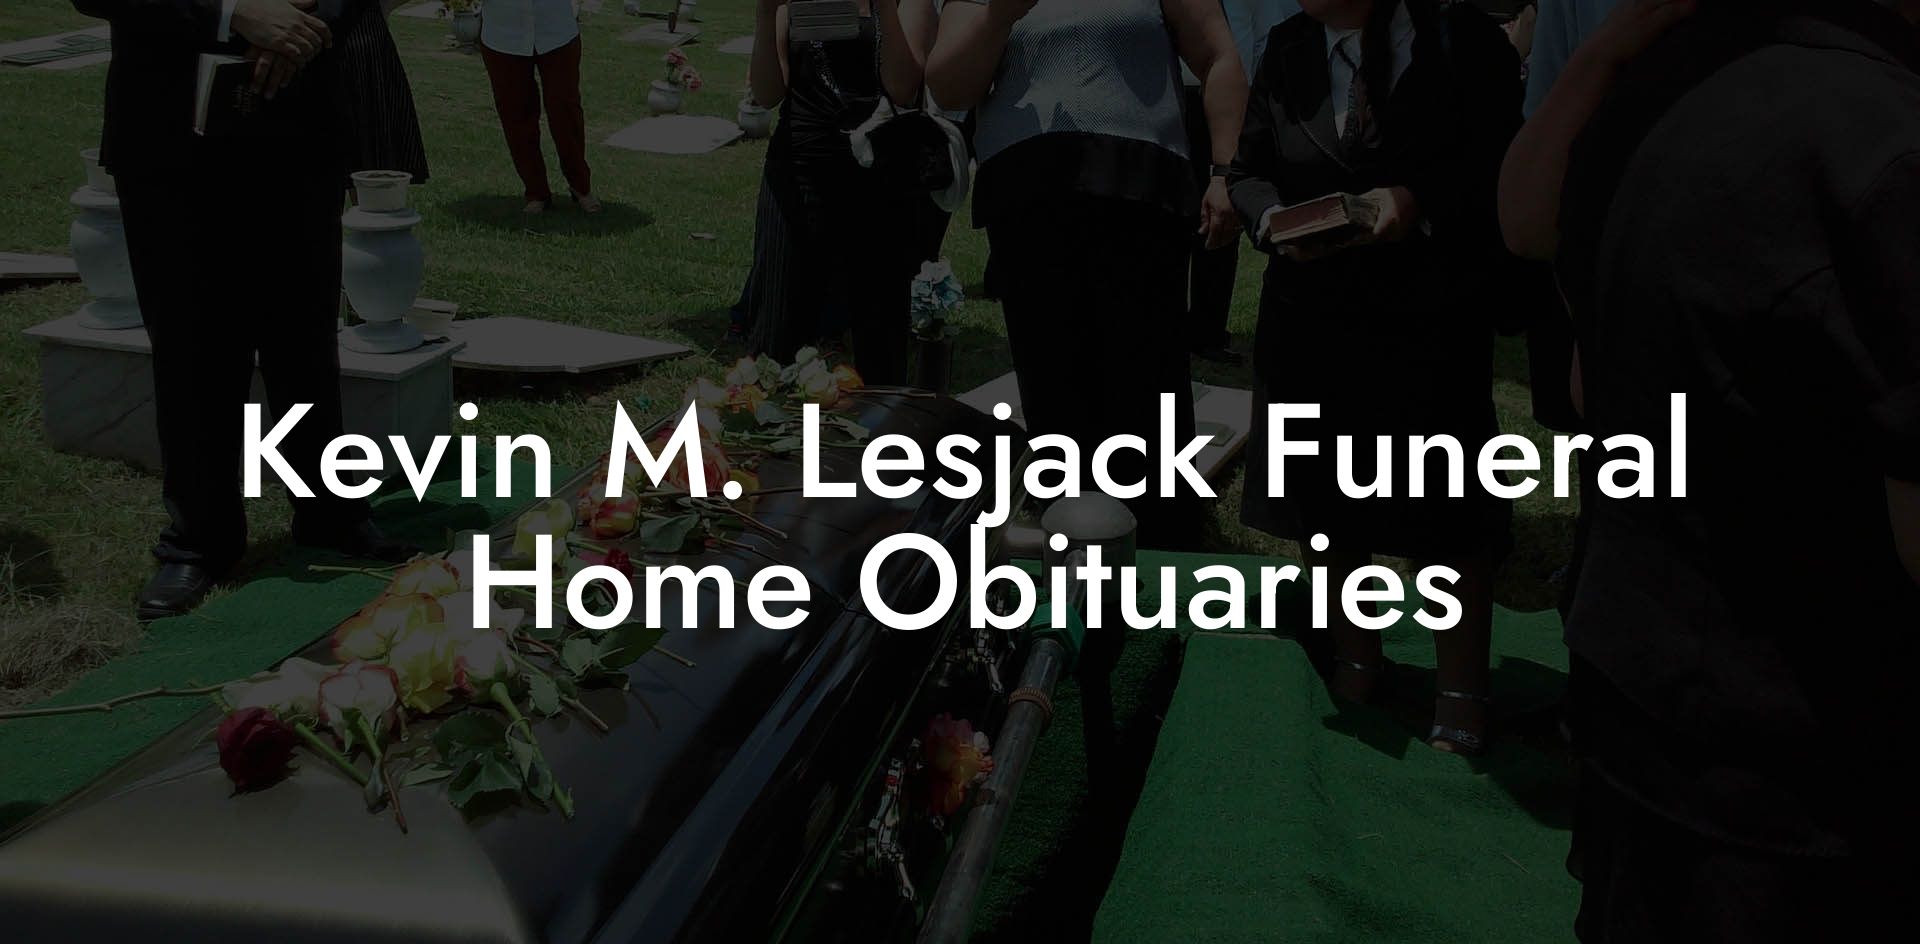 Kevin M. Lesjack Funeral Home Obituaries